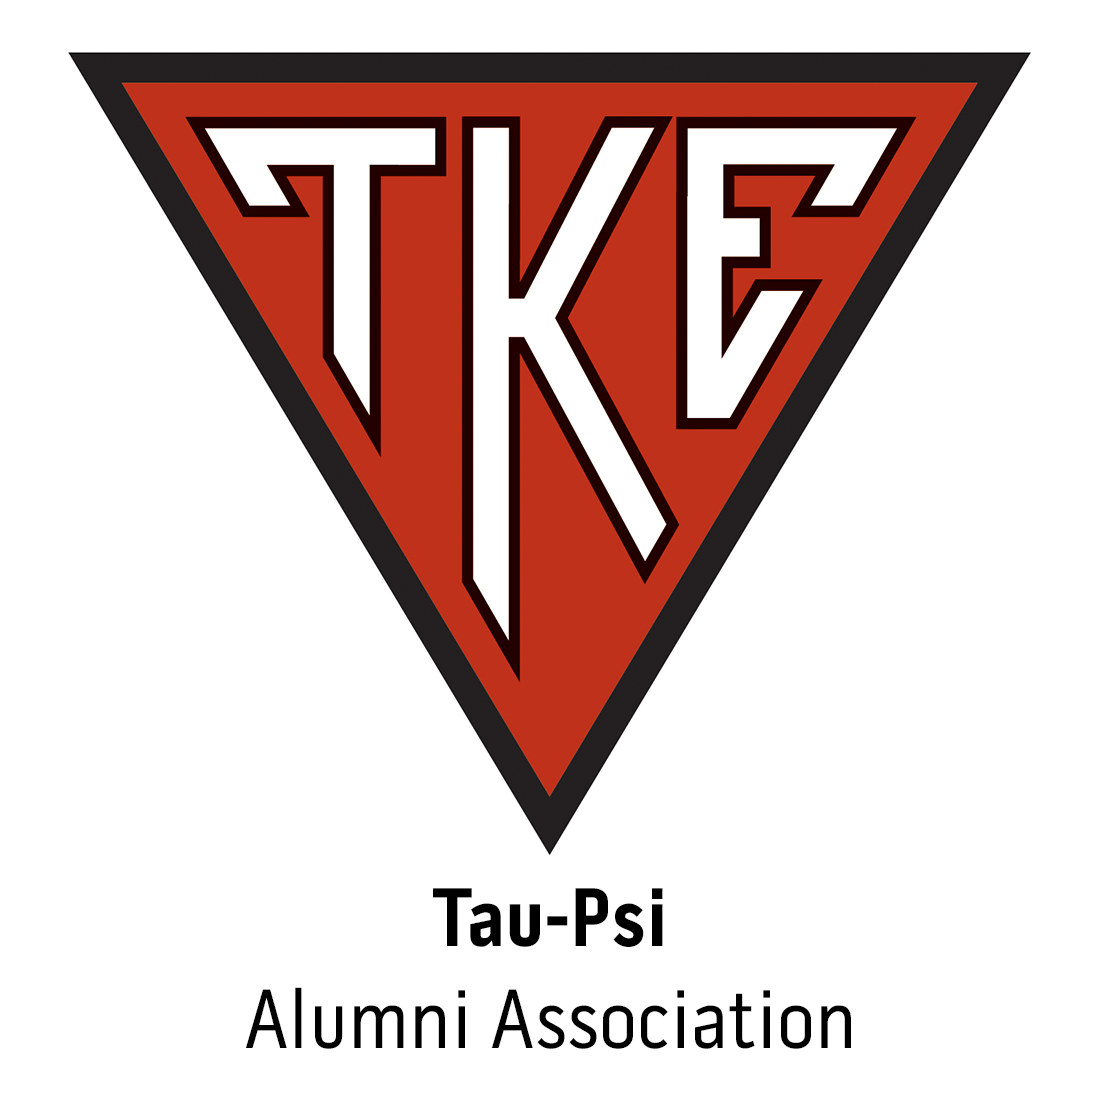 Tau-Psi Alumni Association at University of West Florida